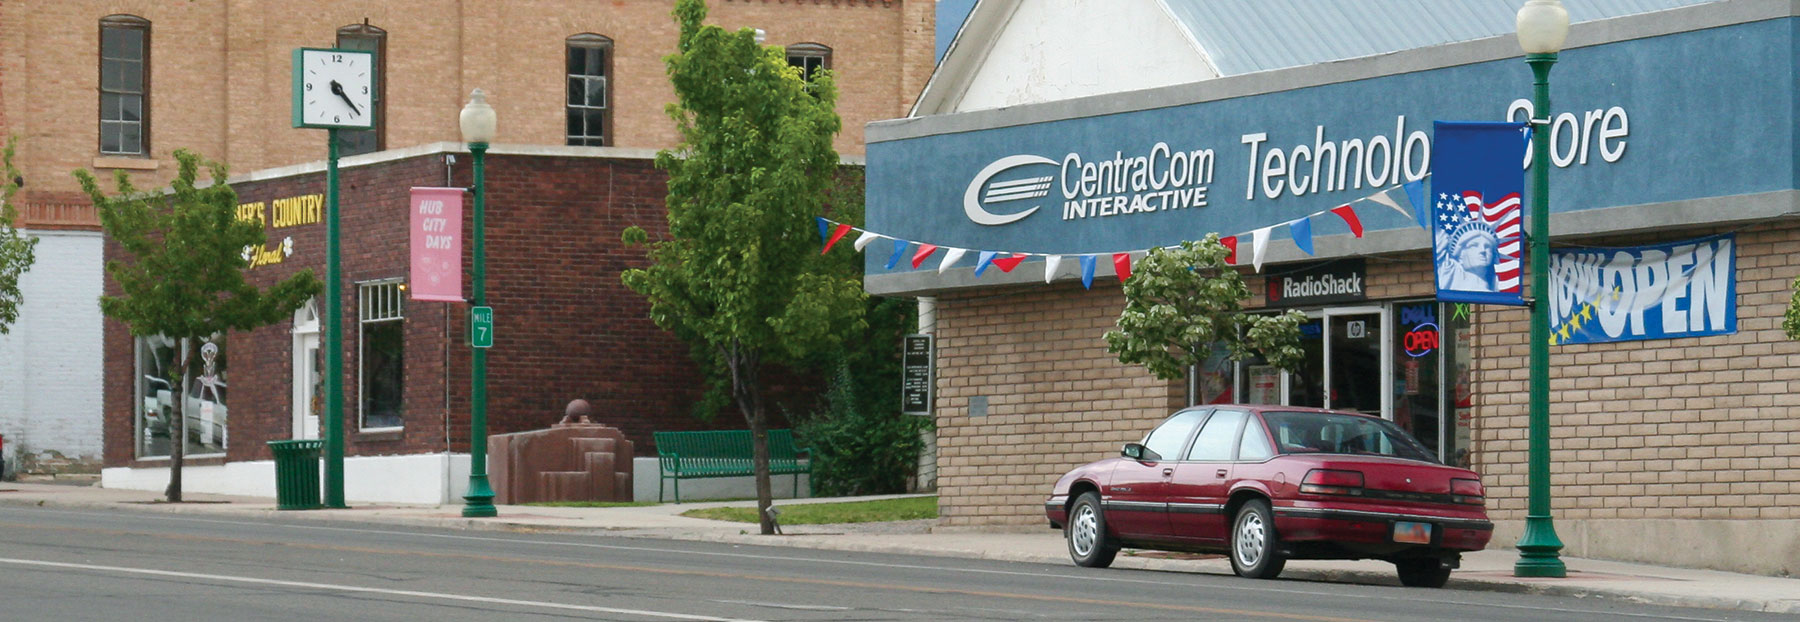 CentraCom Technology Store